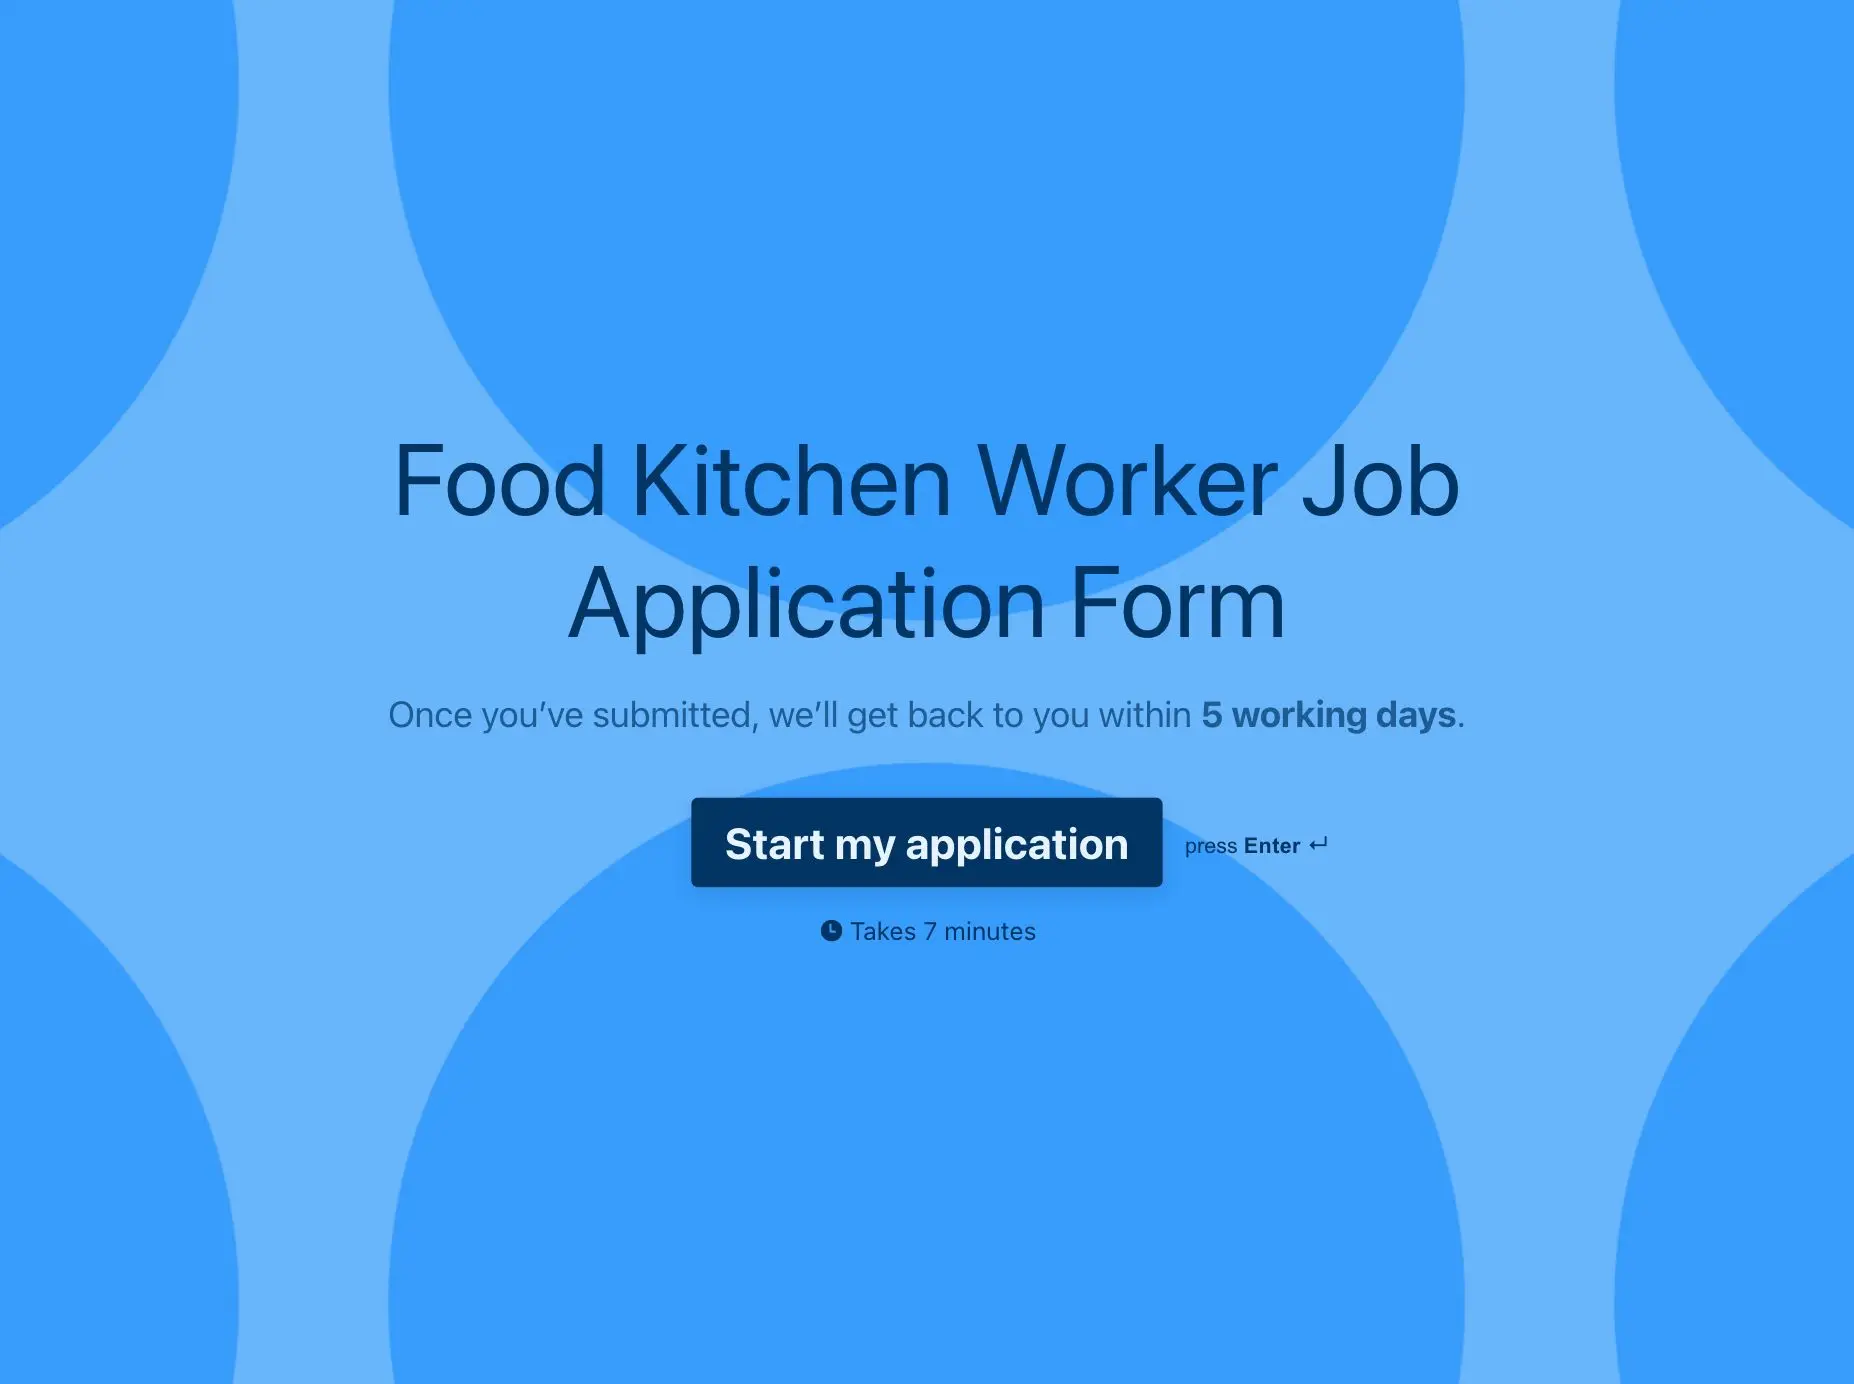 Food Kitchen Worker Job Application Form Template Hero